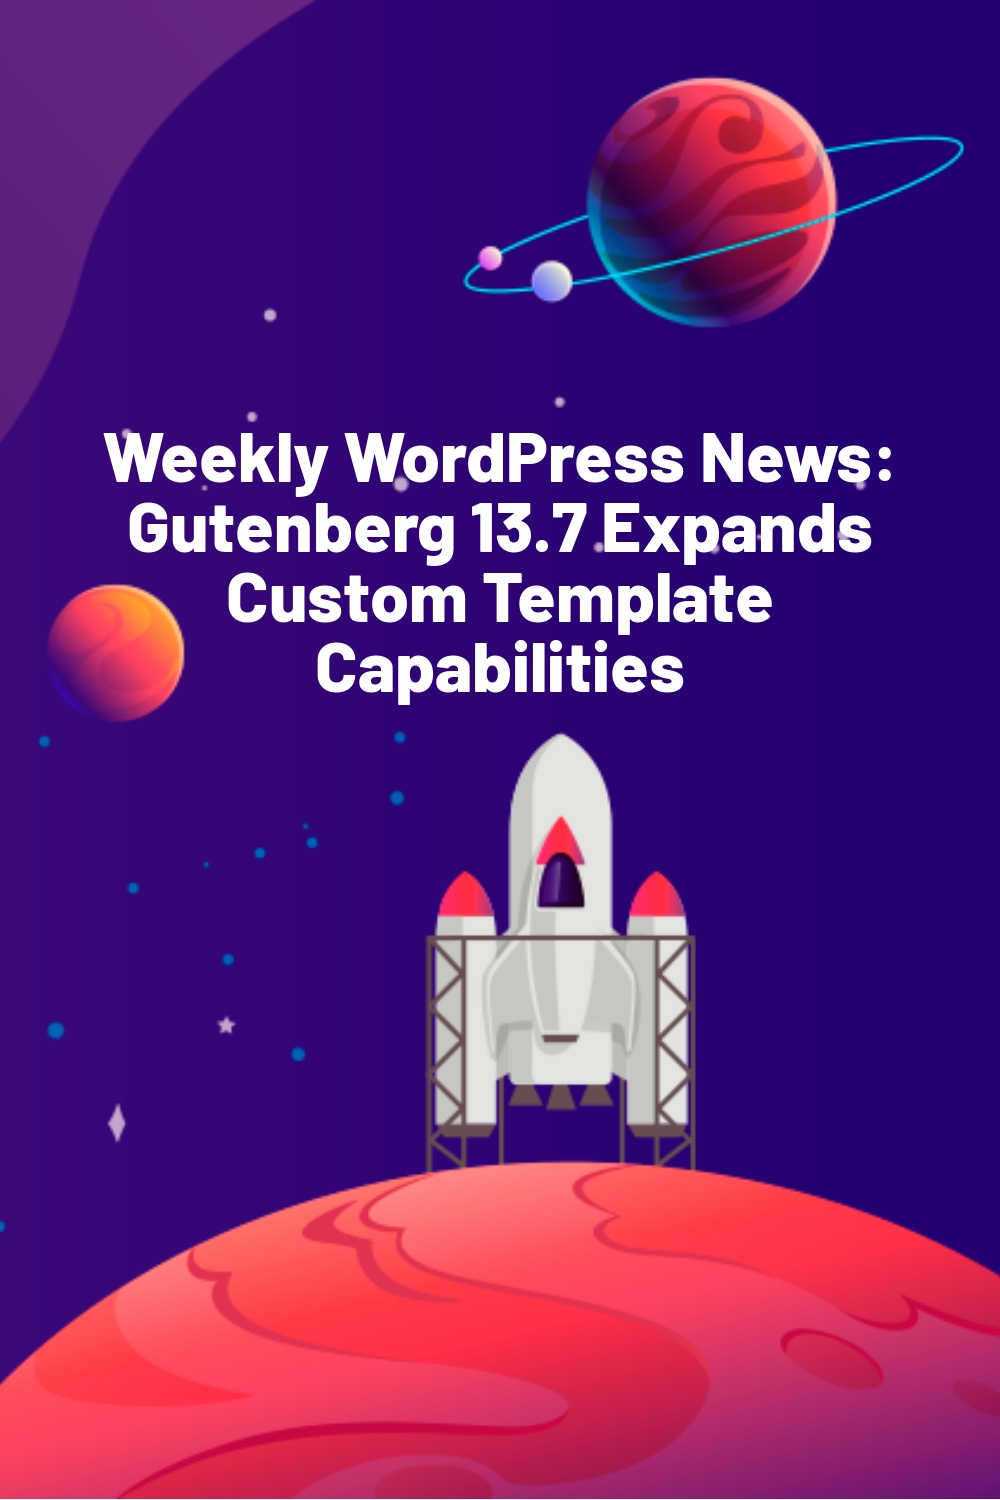 Weekly WordPress News:  Gutenberg 13.7 Expands Custom Template Capabilities